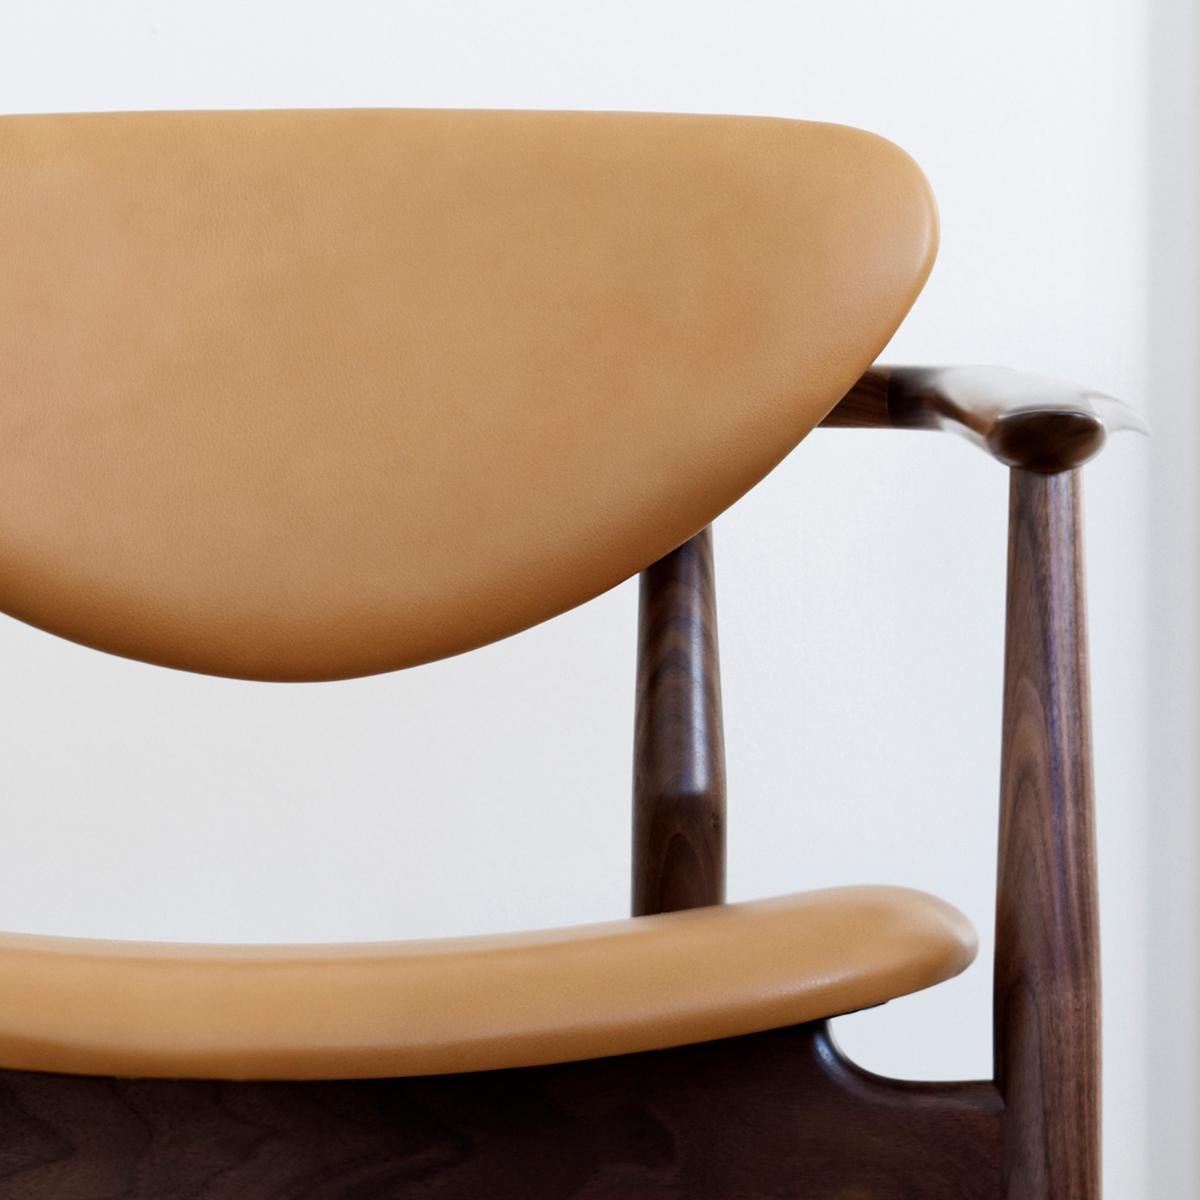 Modern Finn Juhl 109 Chair, Wood and Leather by House of Finn Juhl